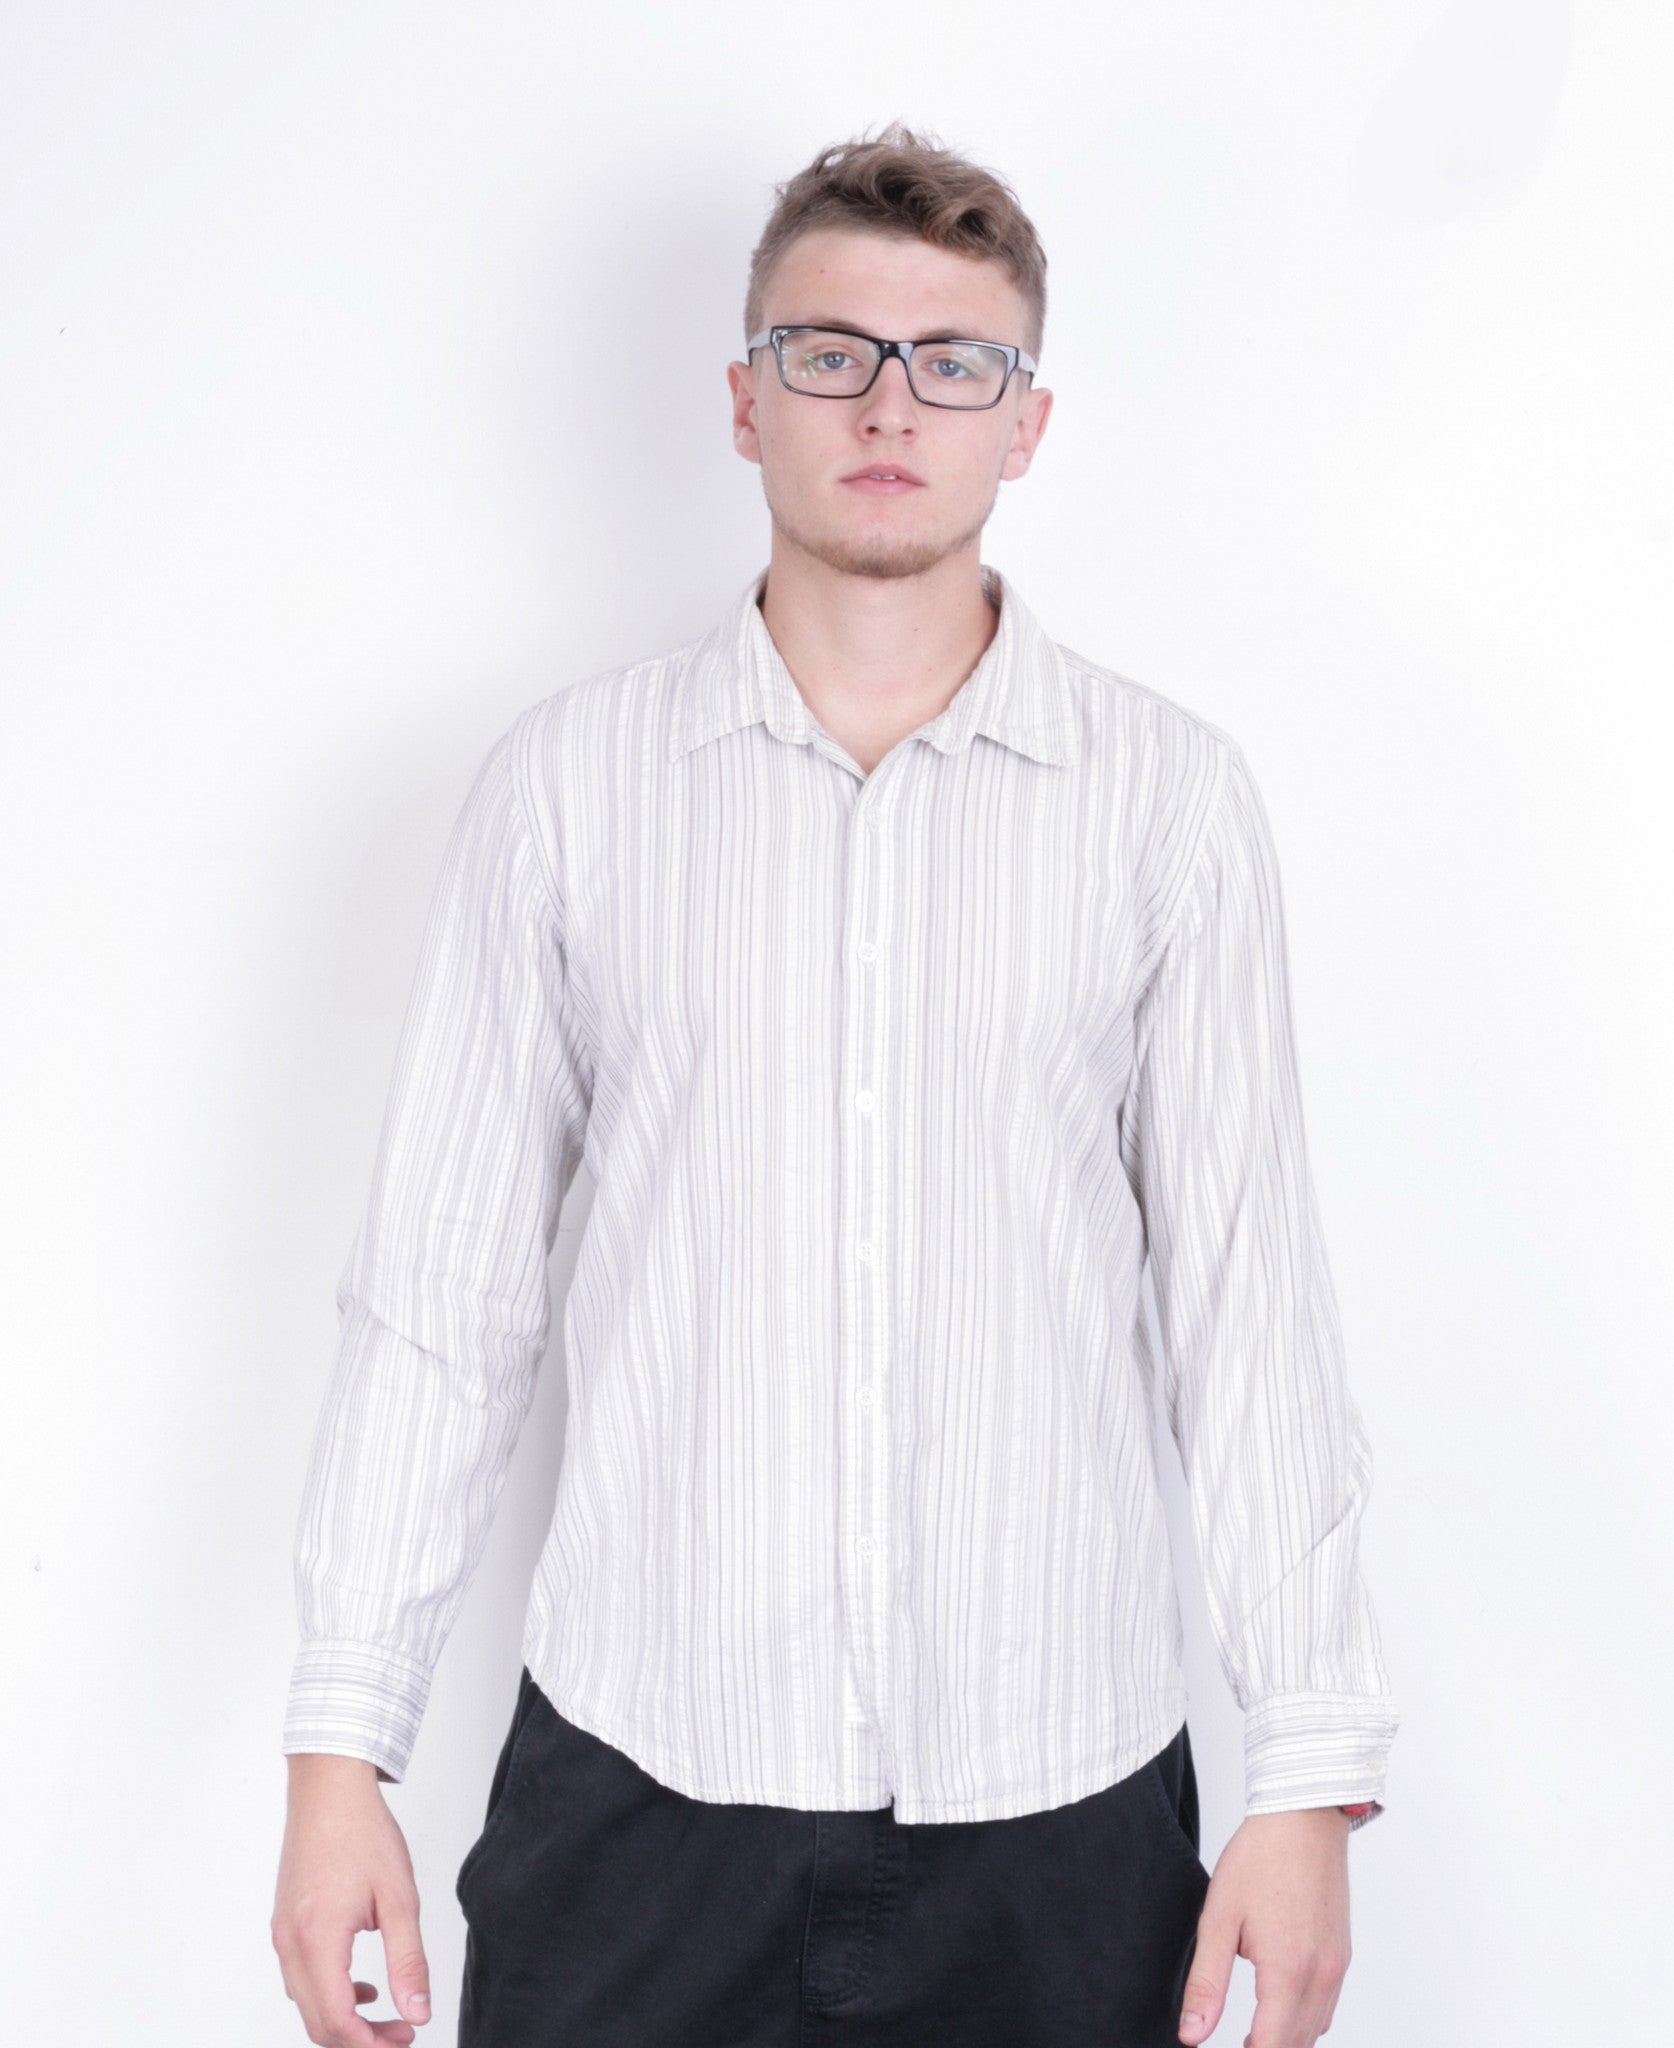 Calvin Klein Jeans Mens M Casual Shirt Striped Cotton Short Sleeve - RetrospectClothes